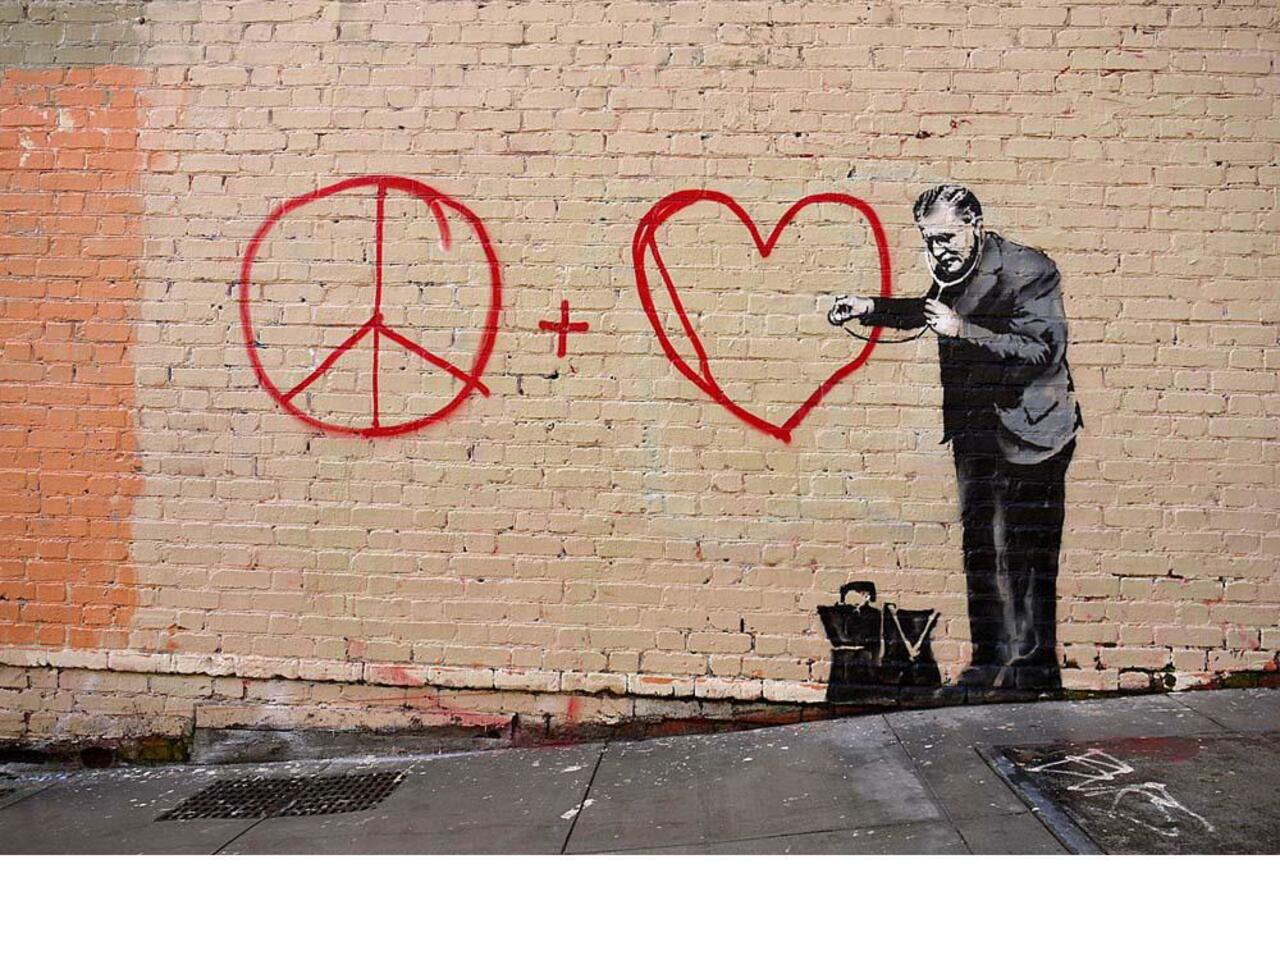 “@upbyartists: BANKSY

#streetart #painting #mural #art #photo #urbanart #graffiti #world #banksy http://t.co/E0kh0WnSvw”